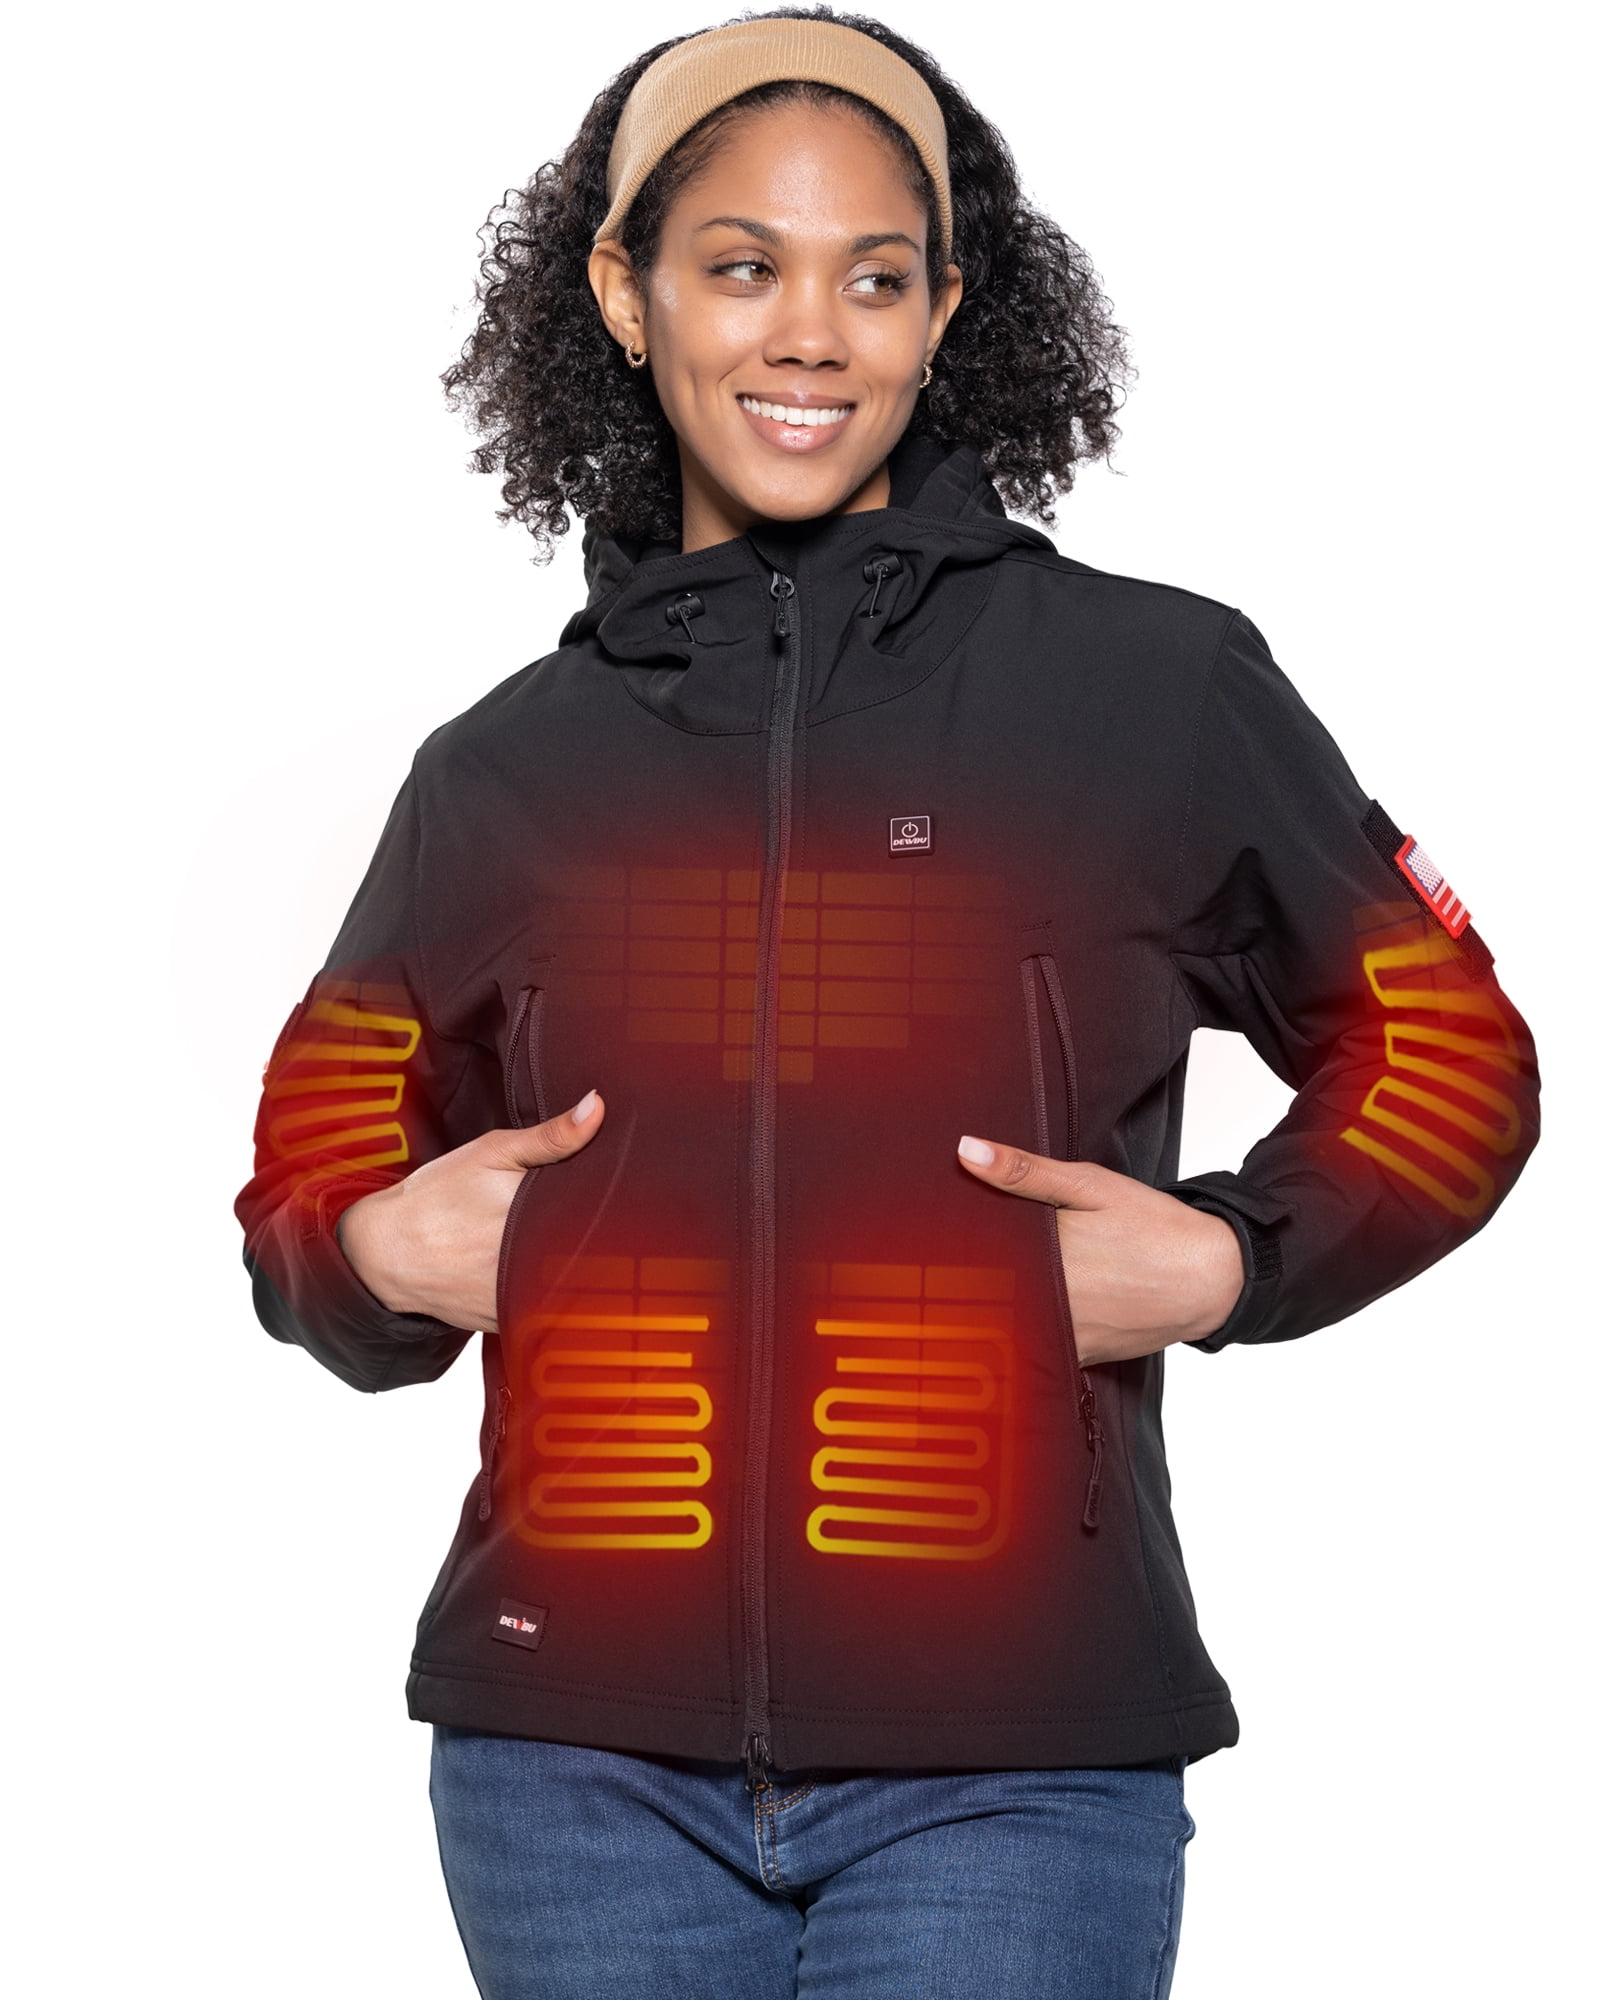 Women's Electric Heated Jacket (10 Great Models)